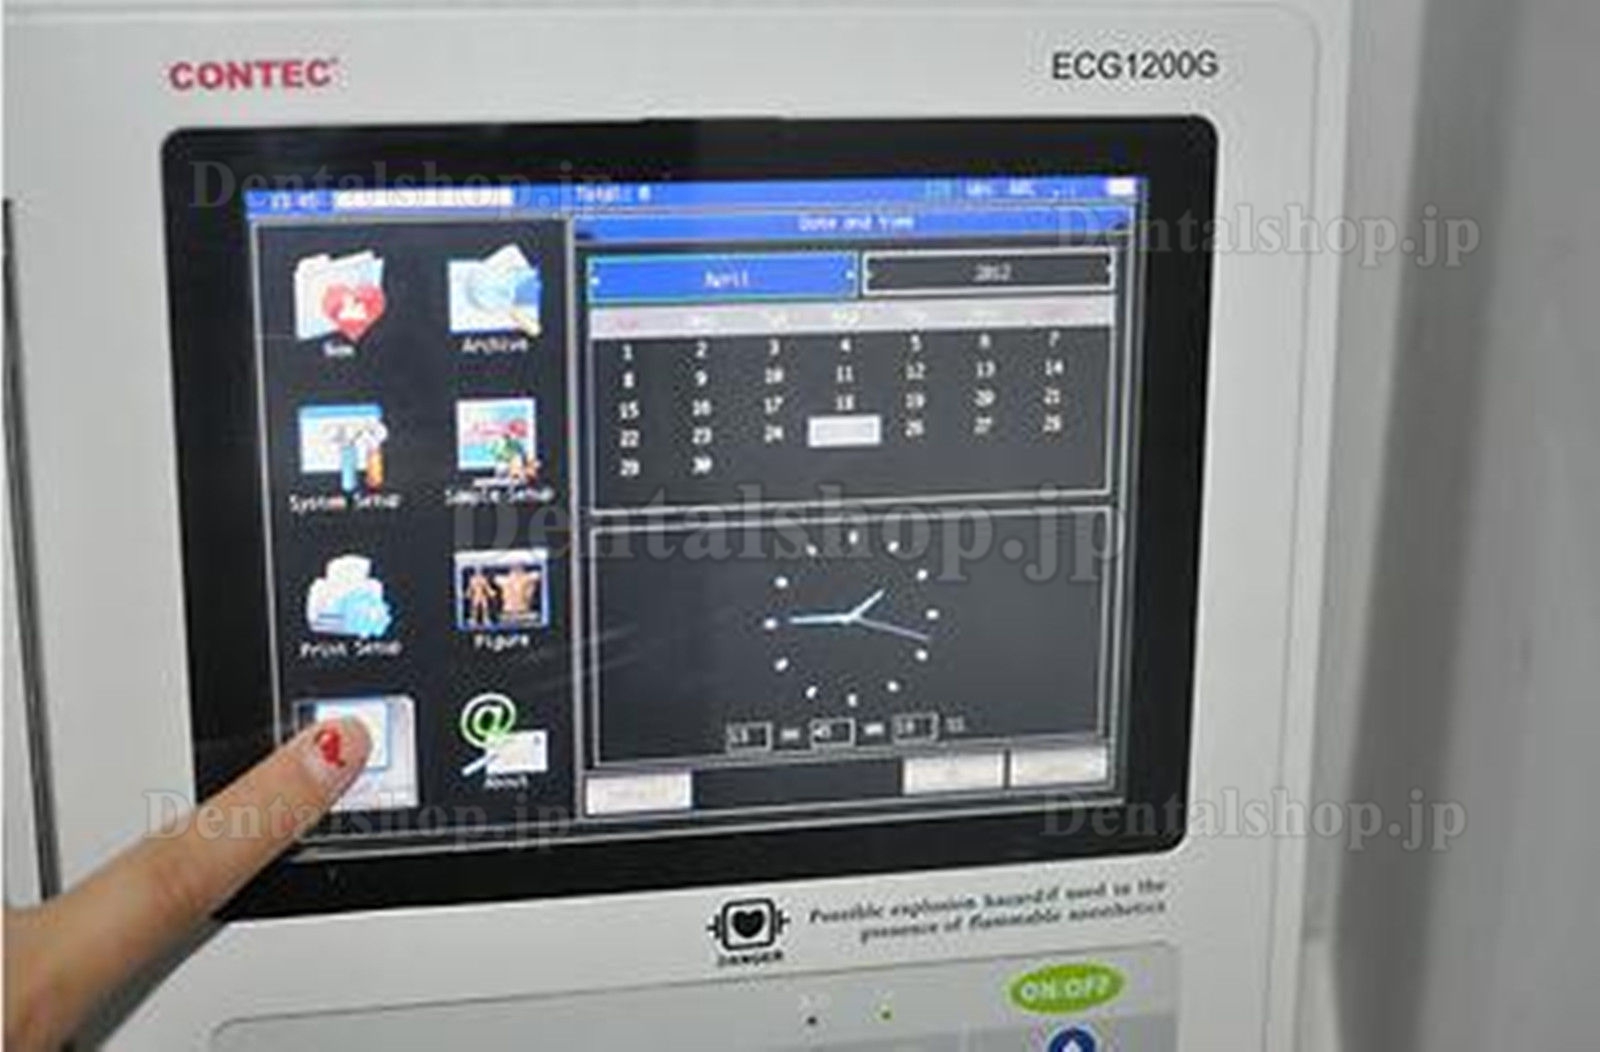 COMTEC® ECG-1200G デジタル12チャンネルECG